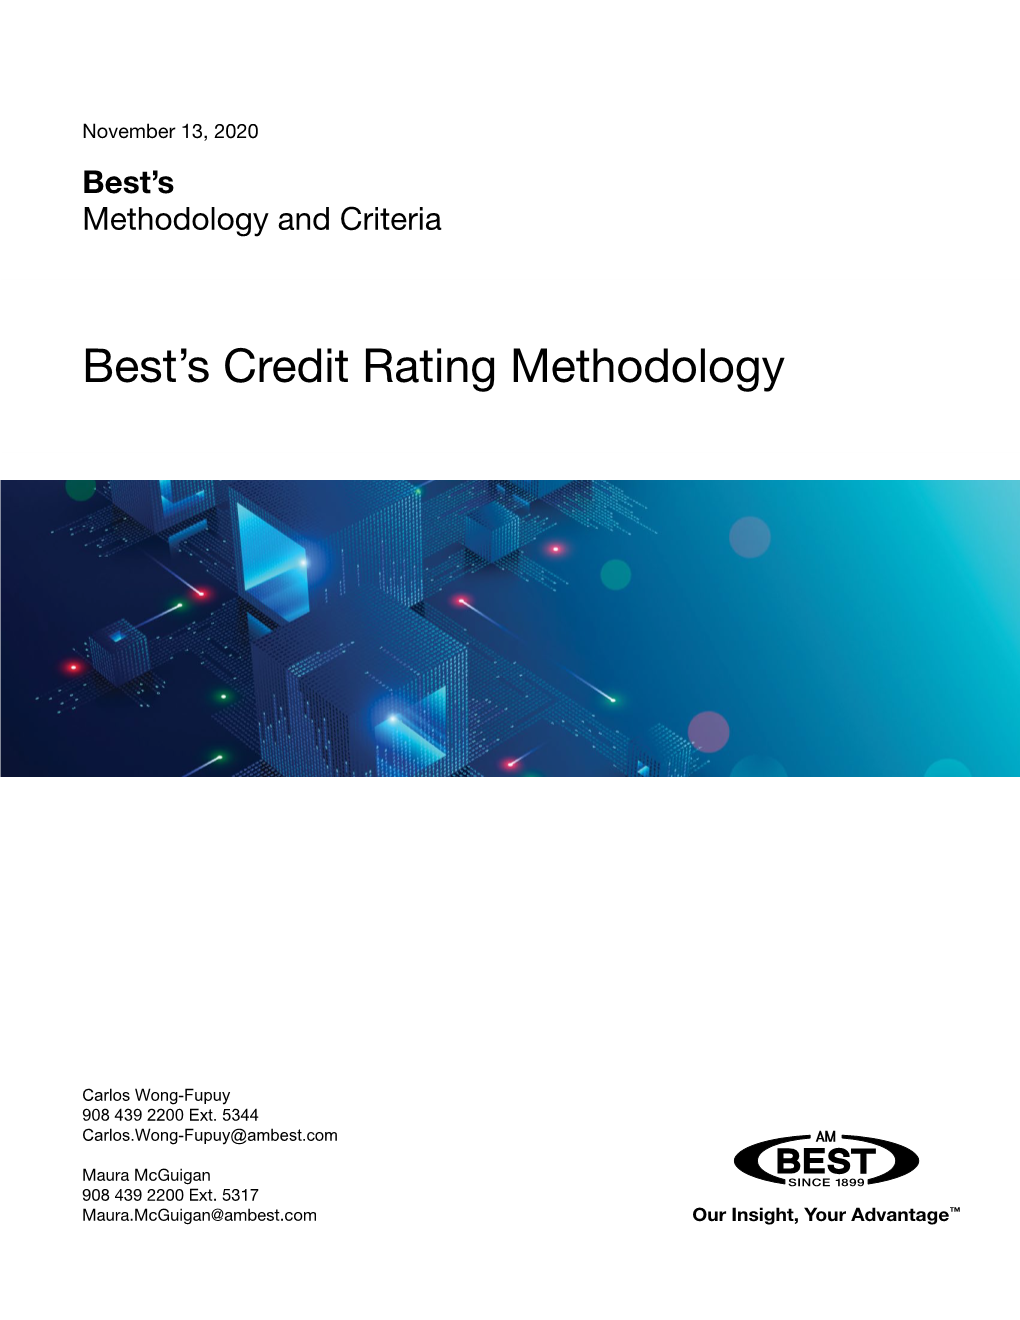 Best's Credit Rating Methodology